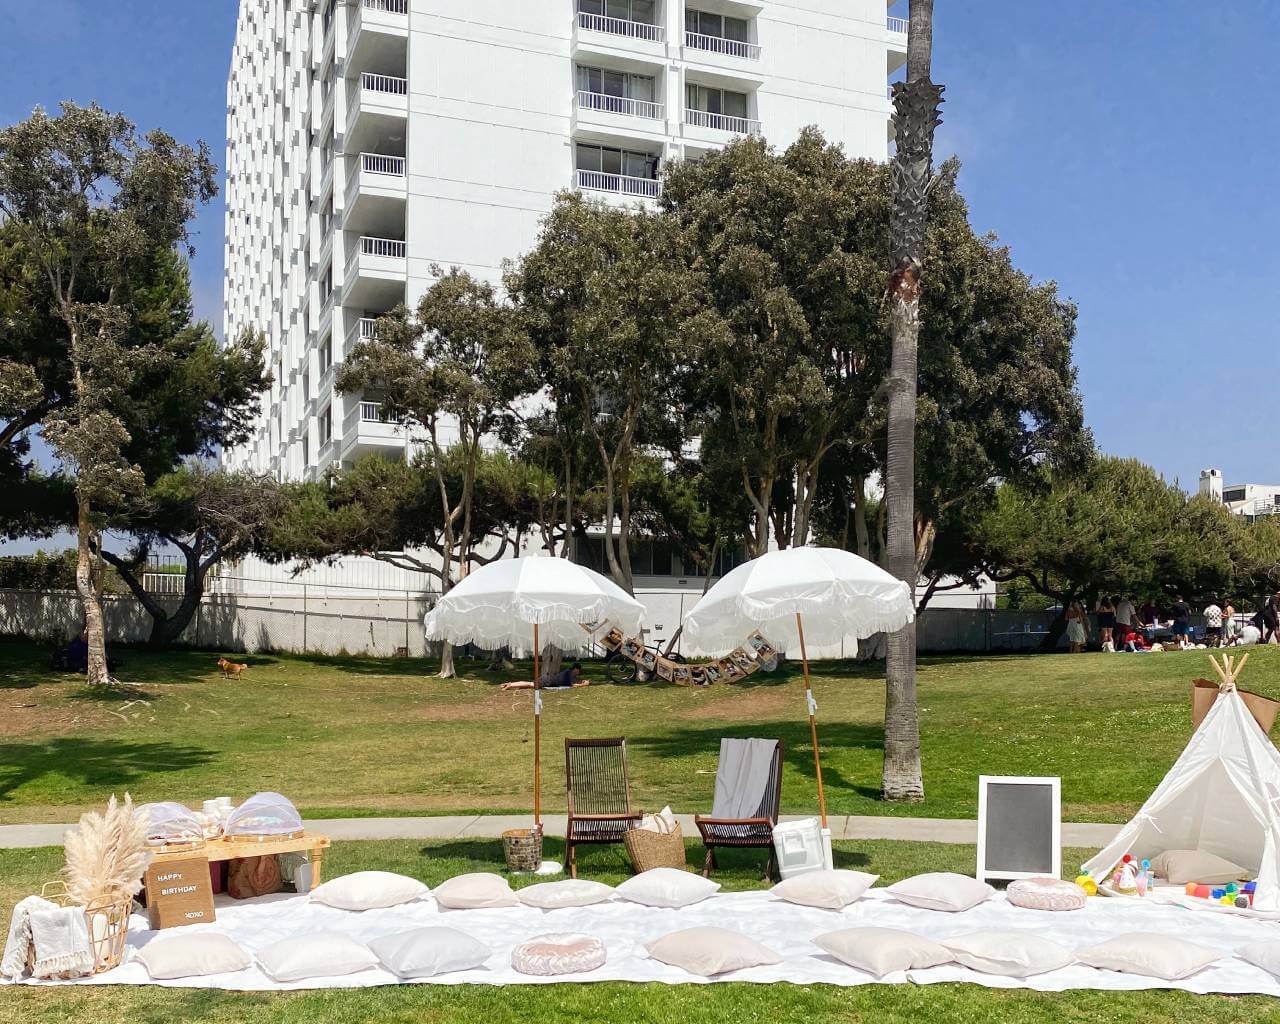 Santa Monica picnic company